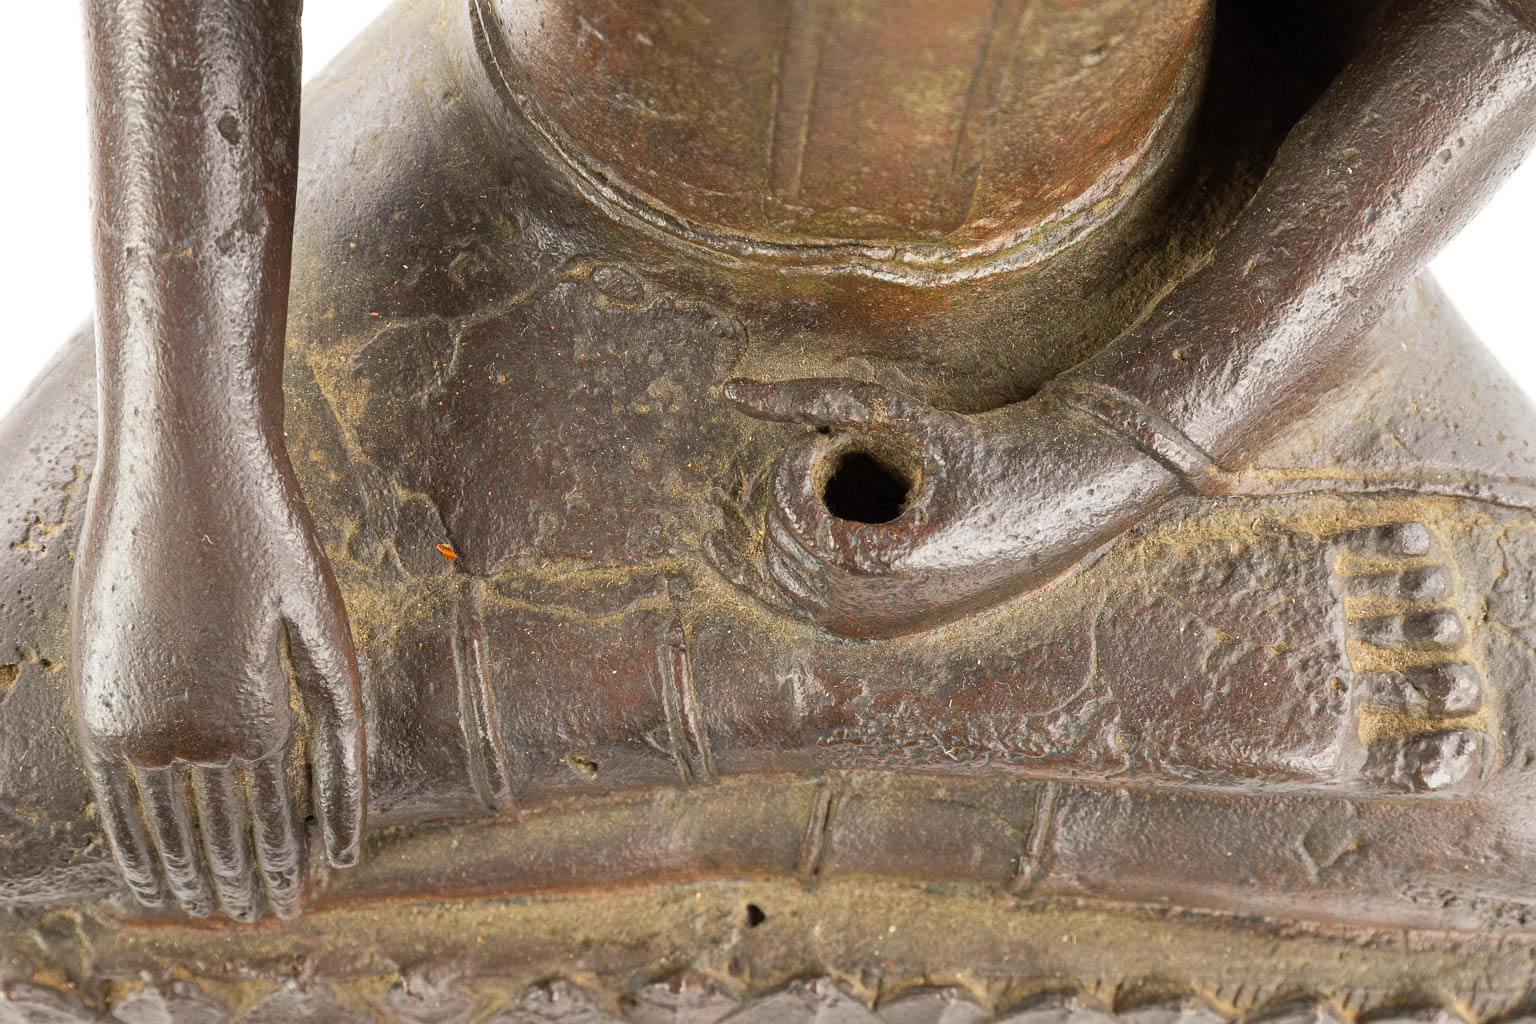 A statue of a Thai Buddha, made of bronze. (H:44cm)